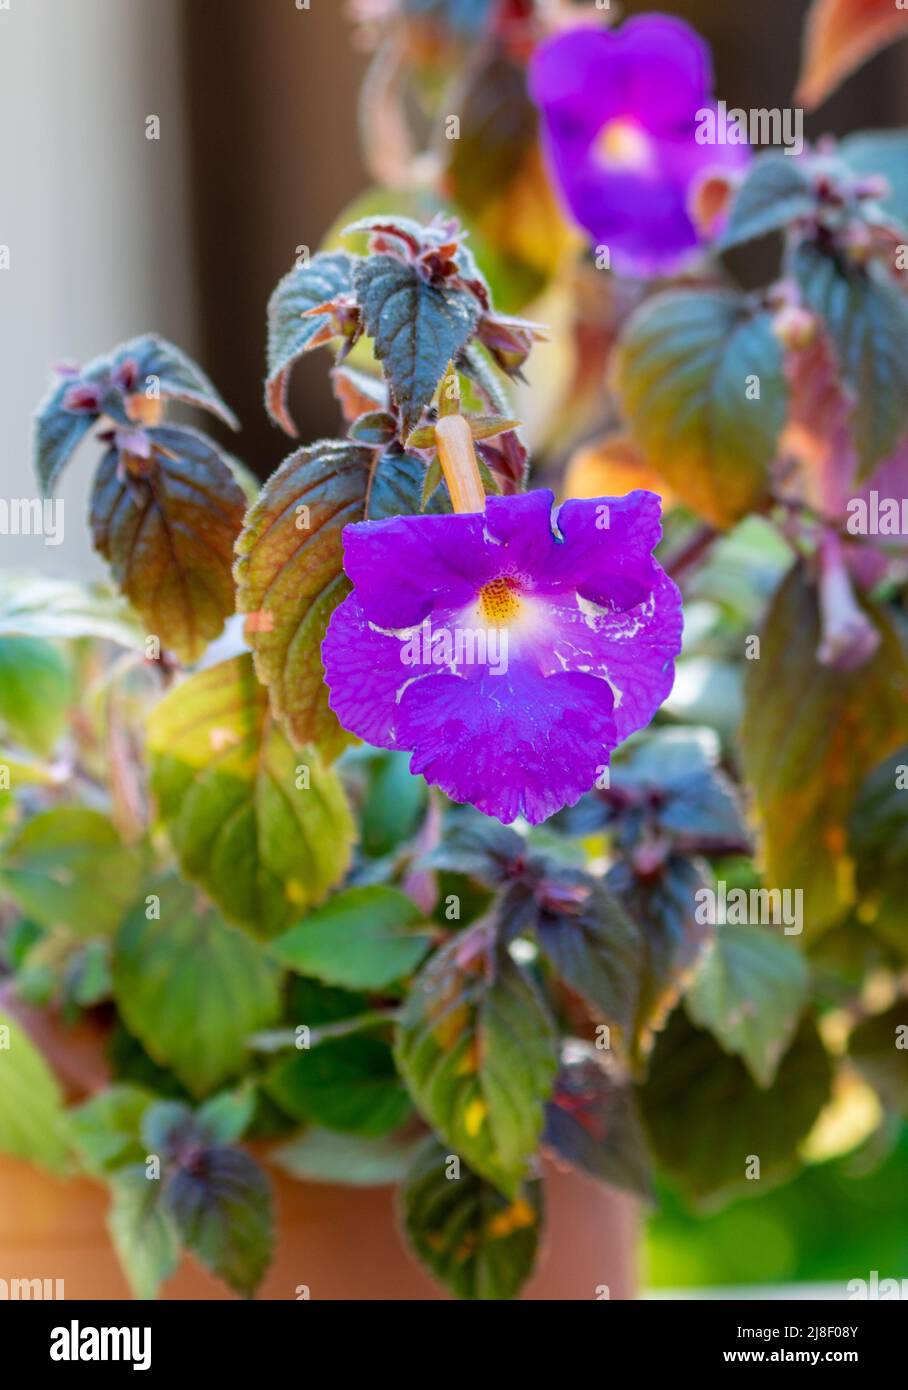 Selective focus shot of Achimenes Longiflora flower. Stock Photo